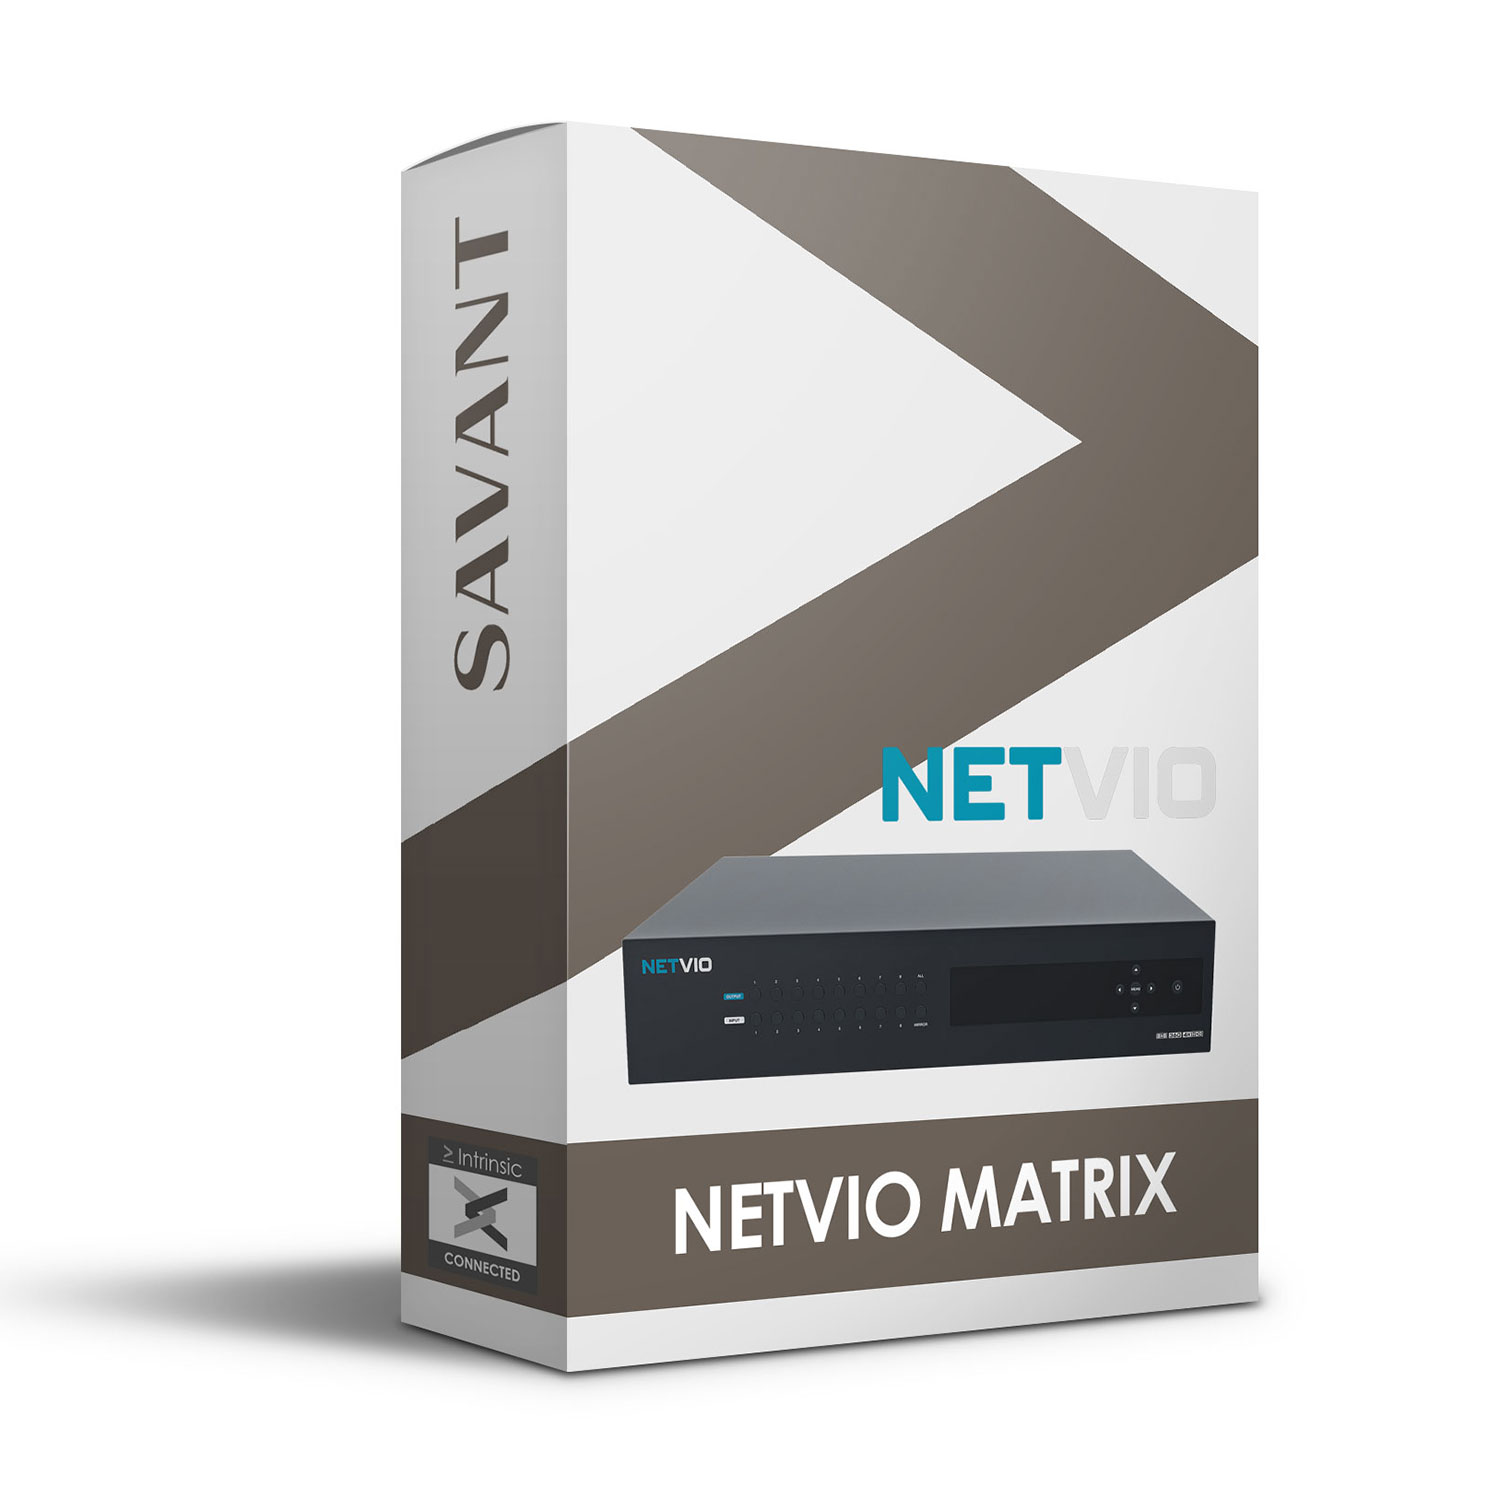 Netvio Profile for Savant